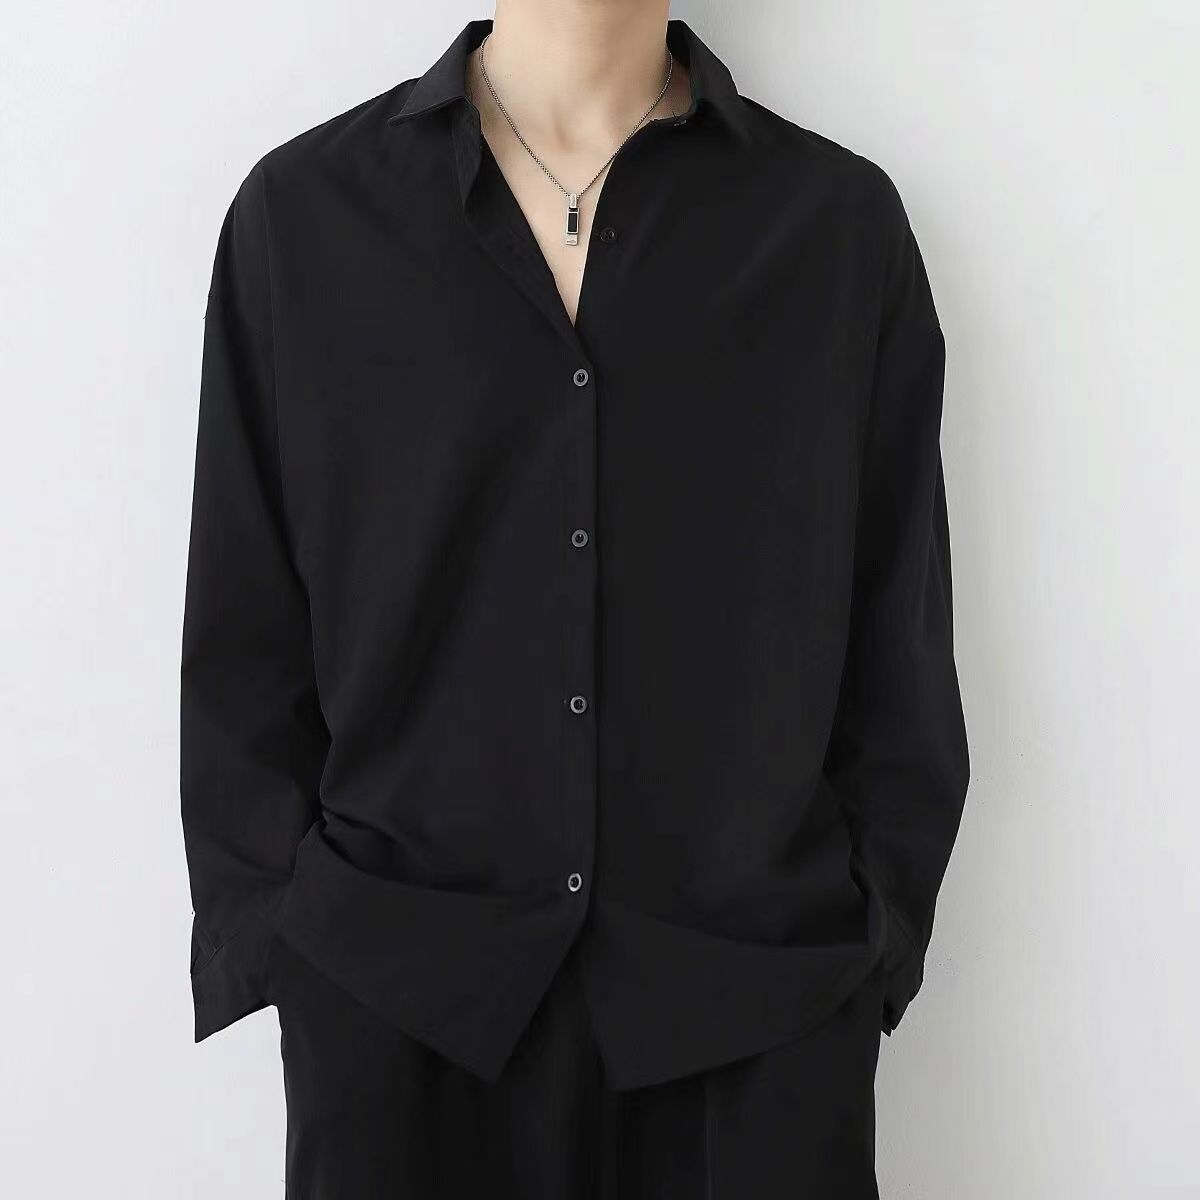 Black shirt men's long-sleeved trend handsome Korean version loose DK uniform men's jacket casual men's white shirt